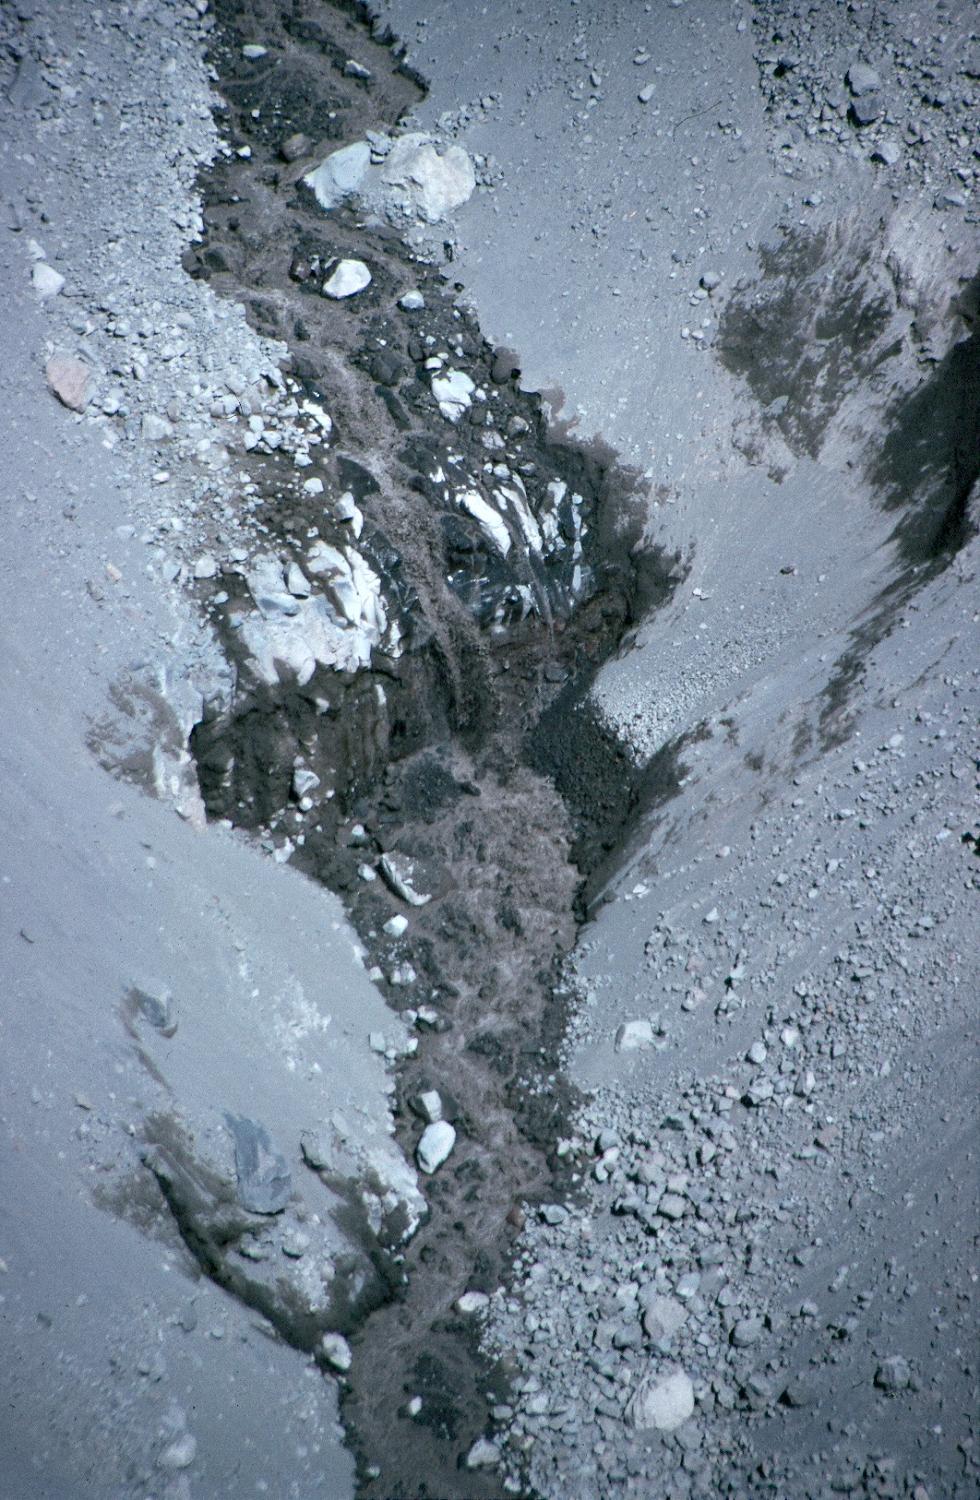 sediment-laden stream